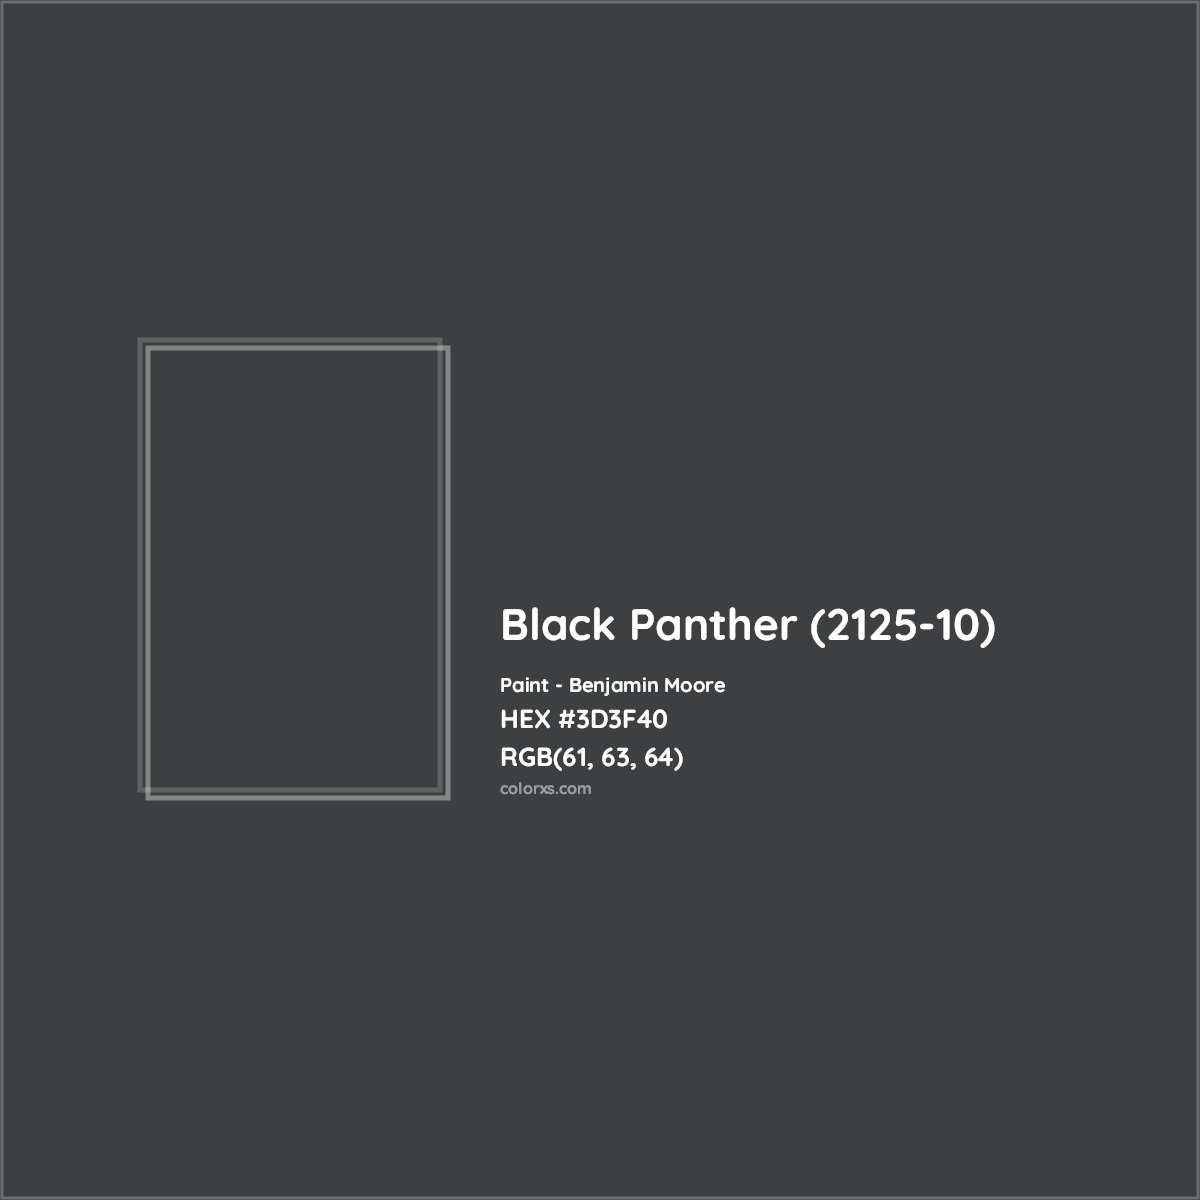 HEX #3D3F40 Black Panther (2125-10) Paint Benjamin Moore - Color Code